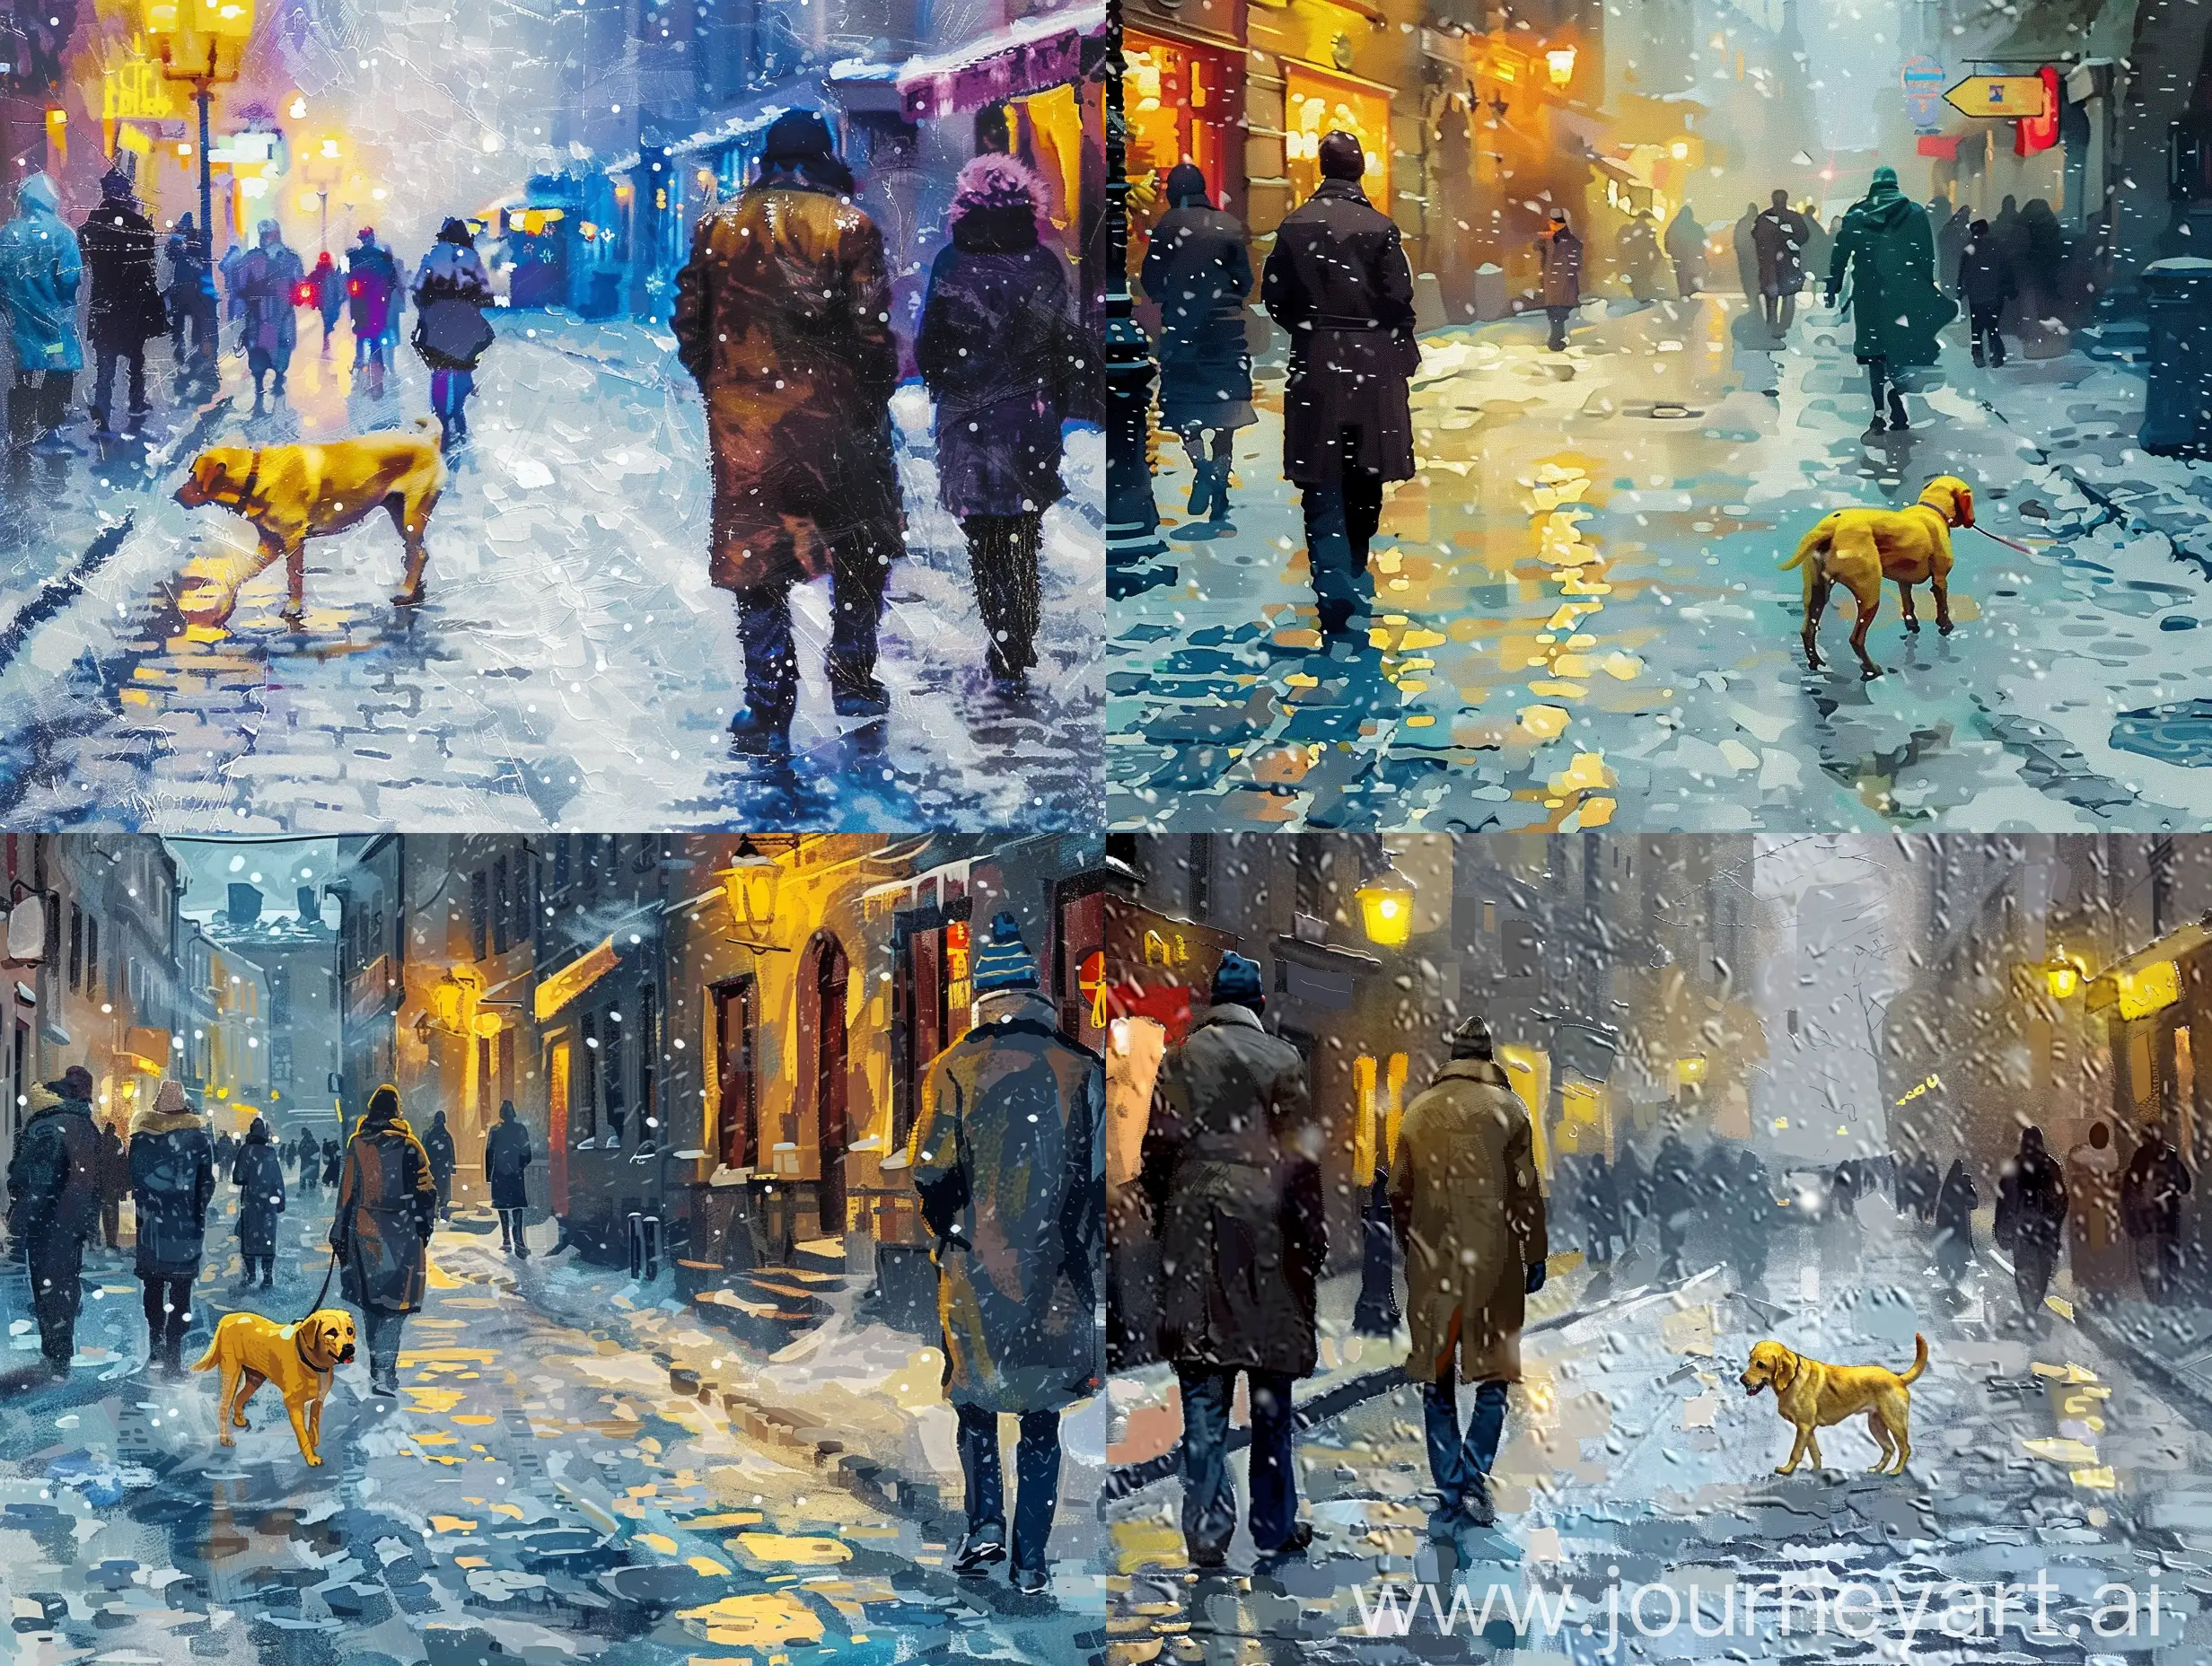 Winter-Evening-Stroll-Urban-Scene-with-Yellow-Dog